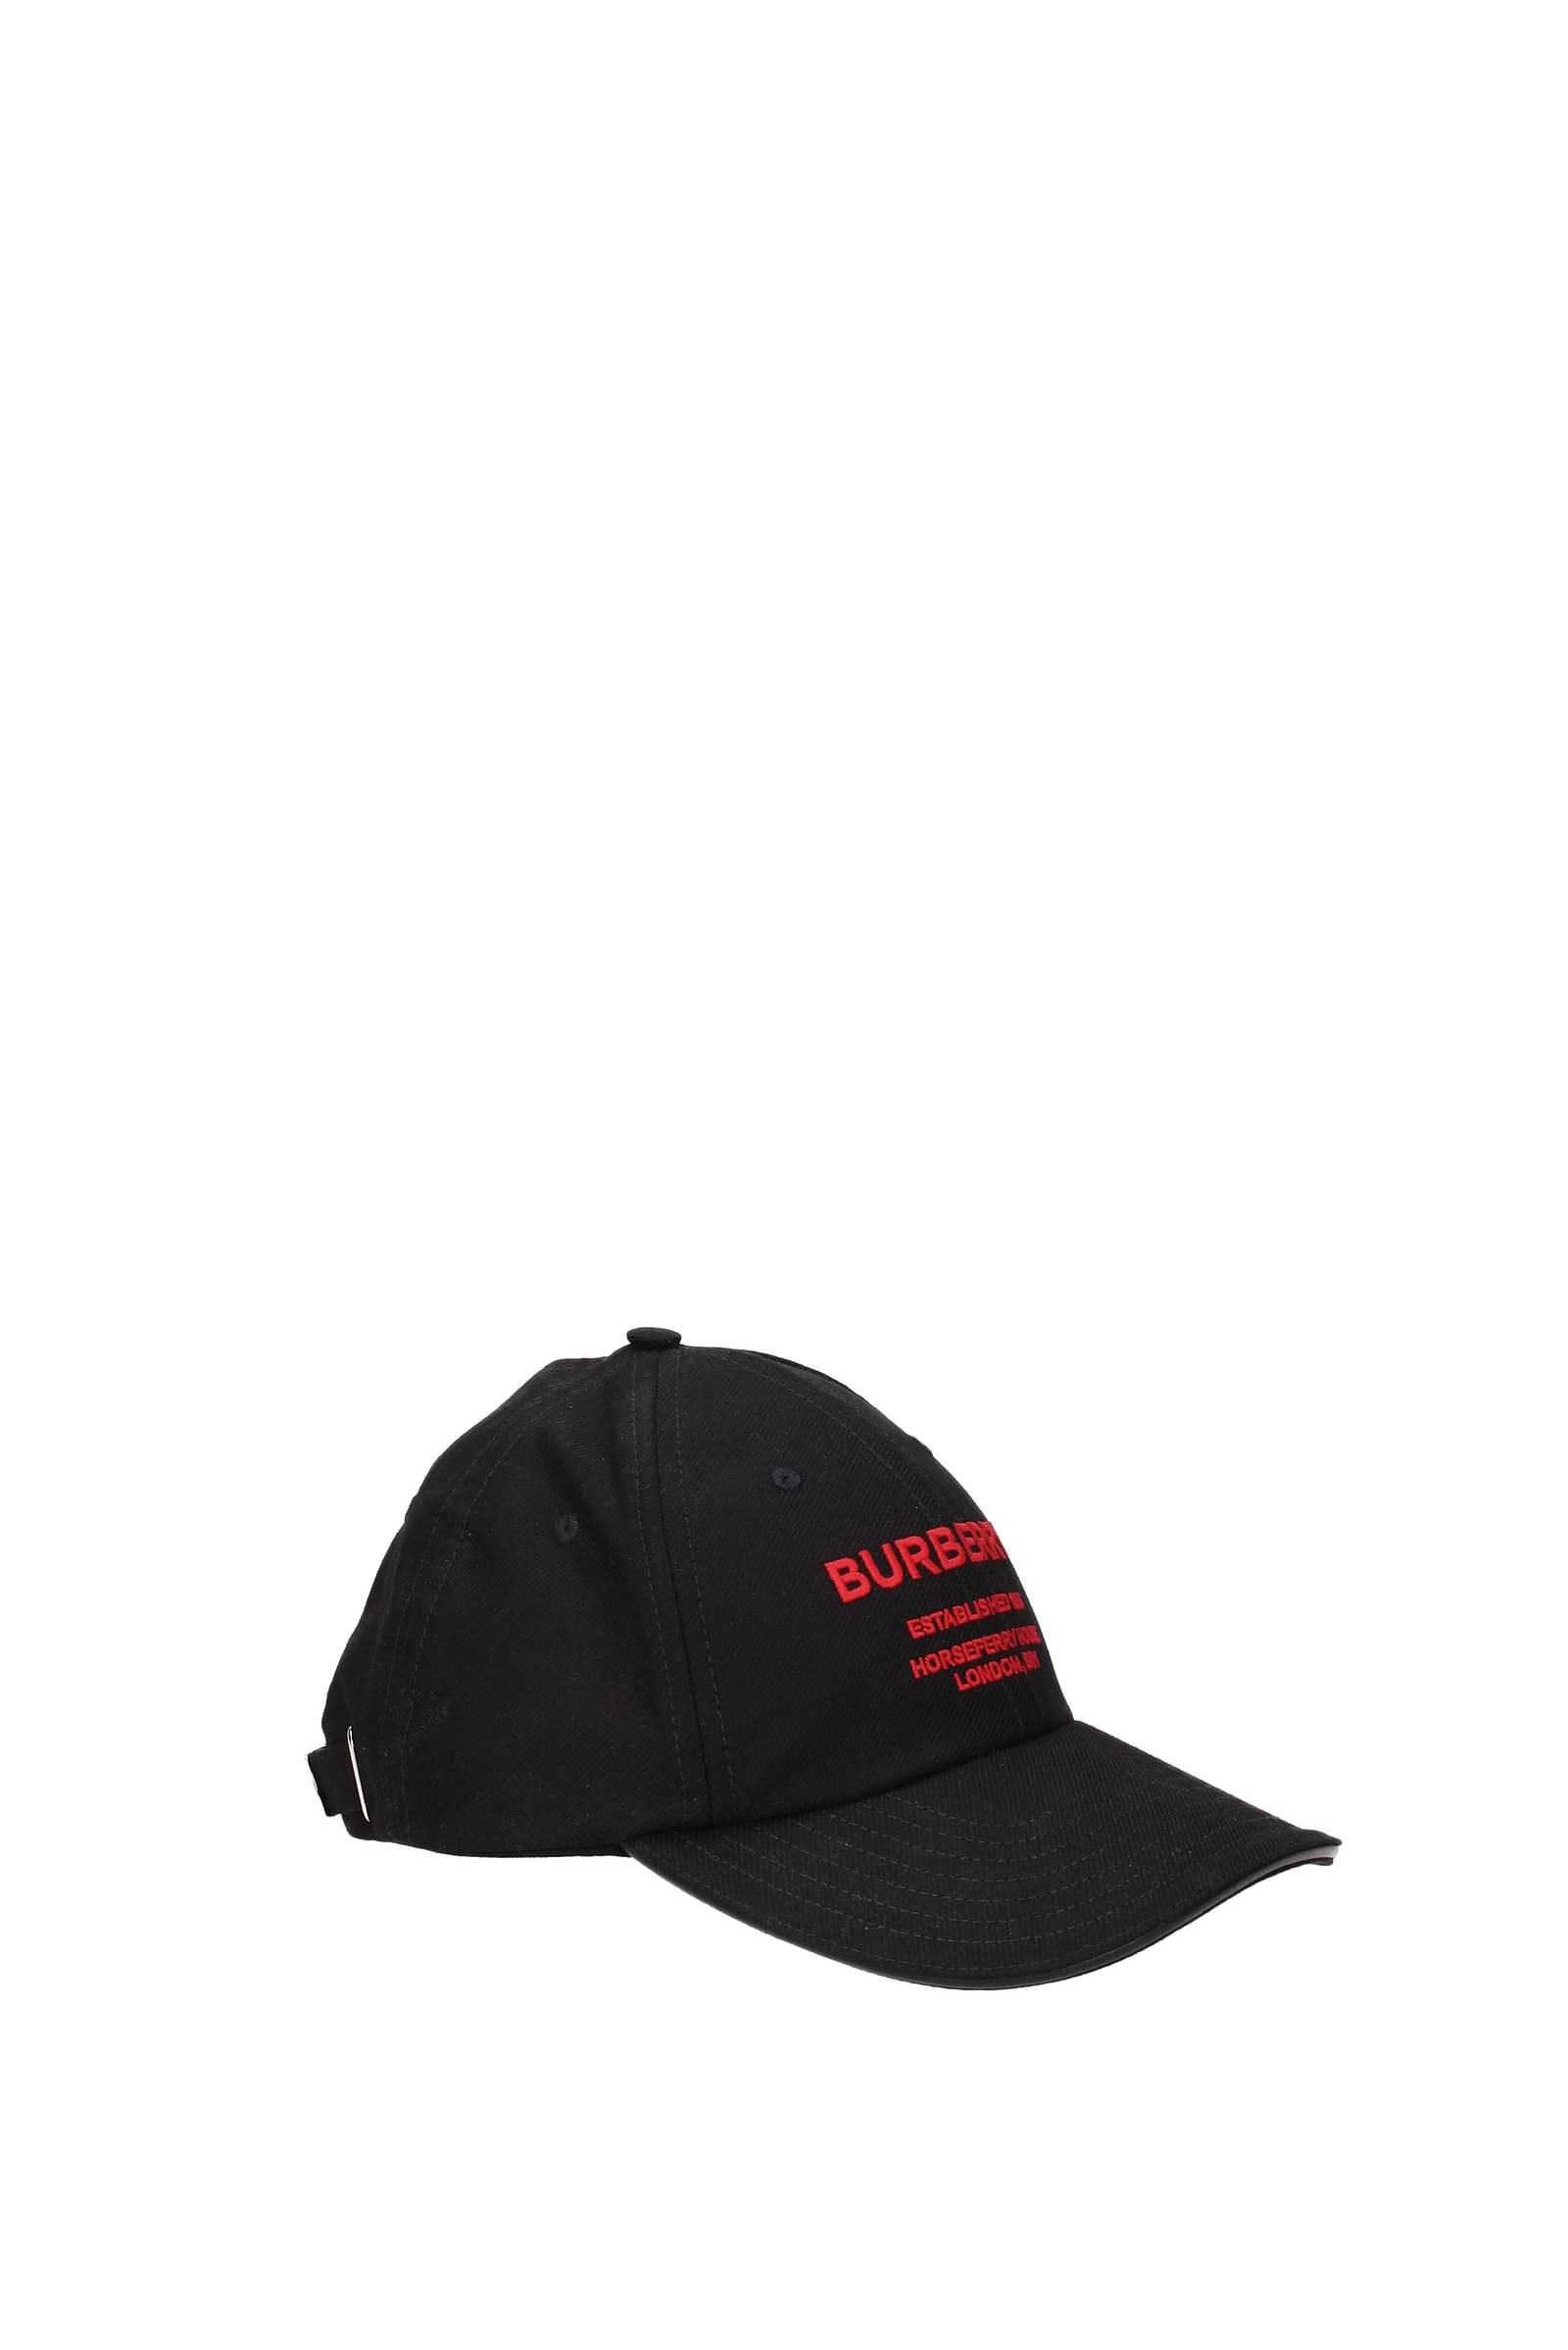 Burberry 帽子 男性 8043040 コットン 黒 赤 157,5€